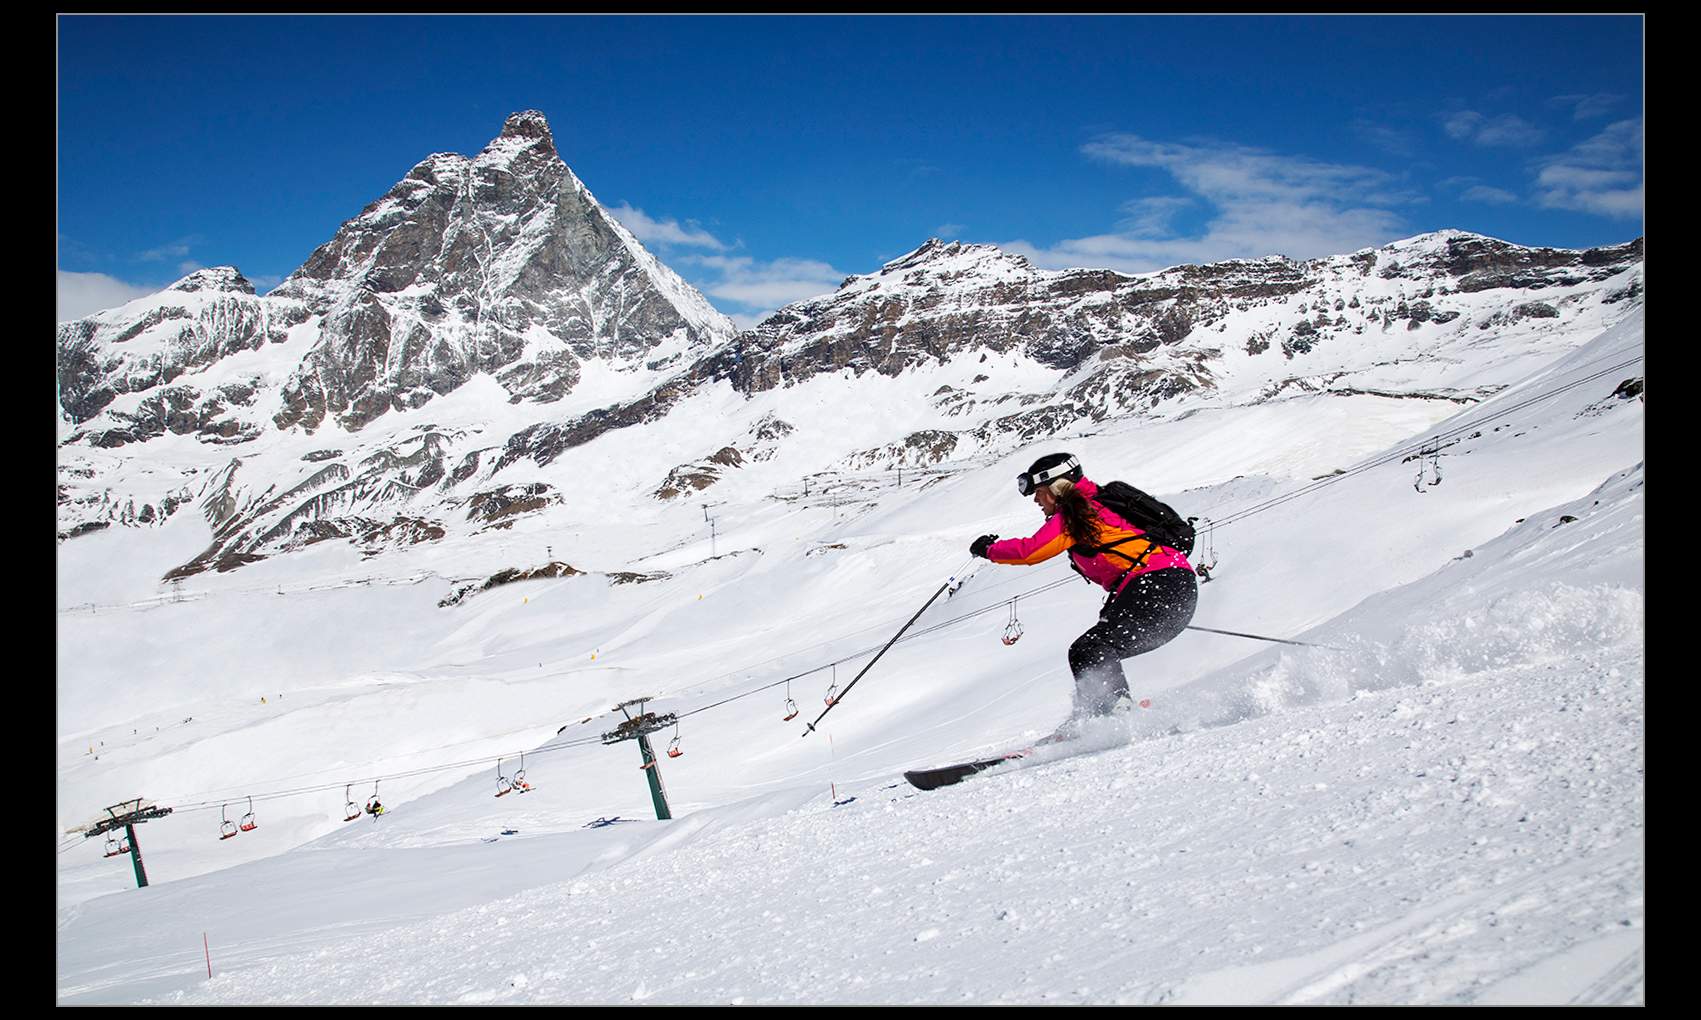 Photo by Fredrik Rege © Ski Photography, Matterhorn, Cervino